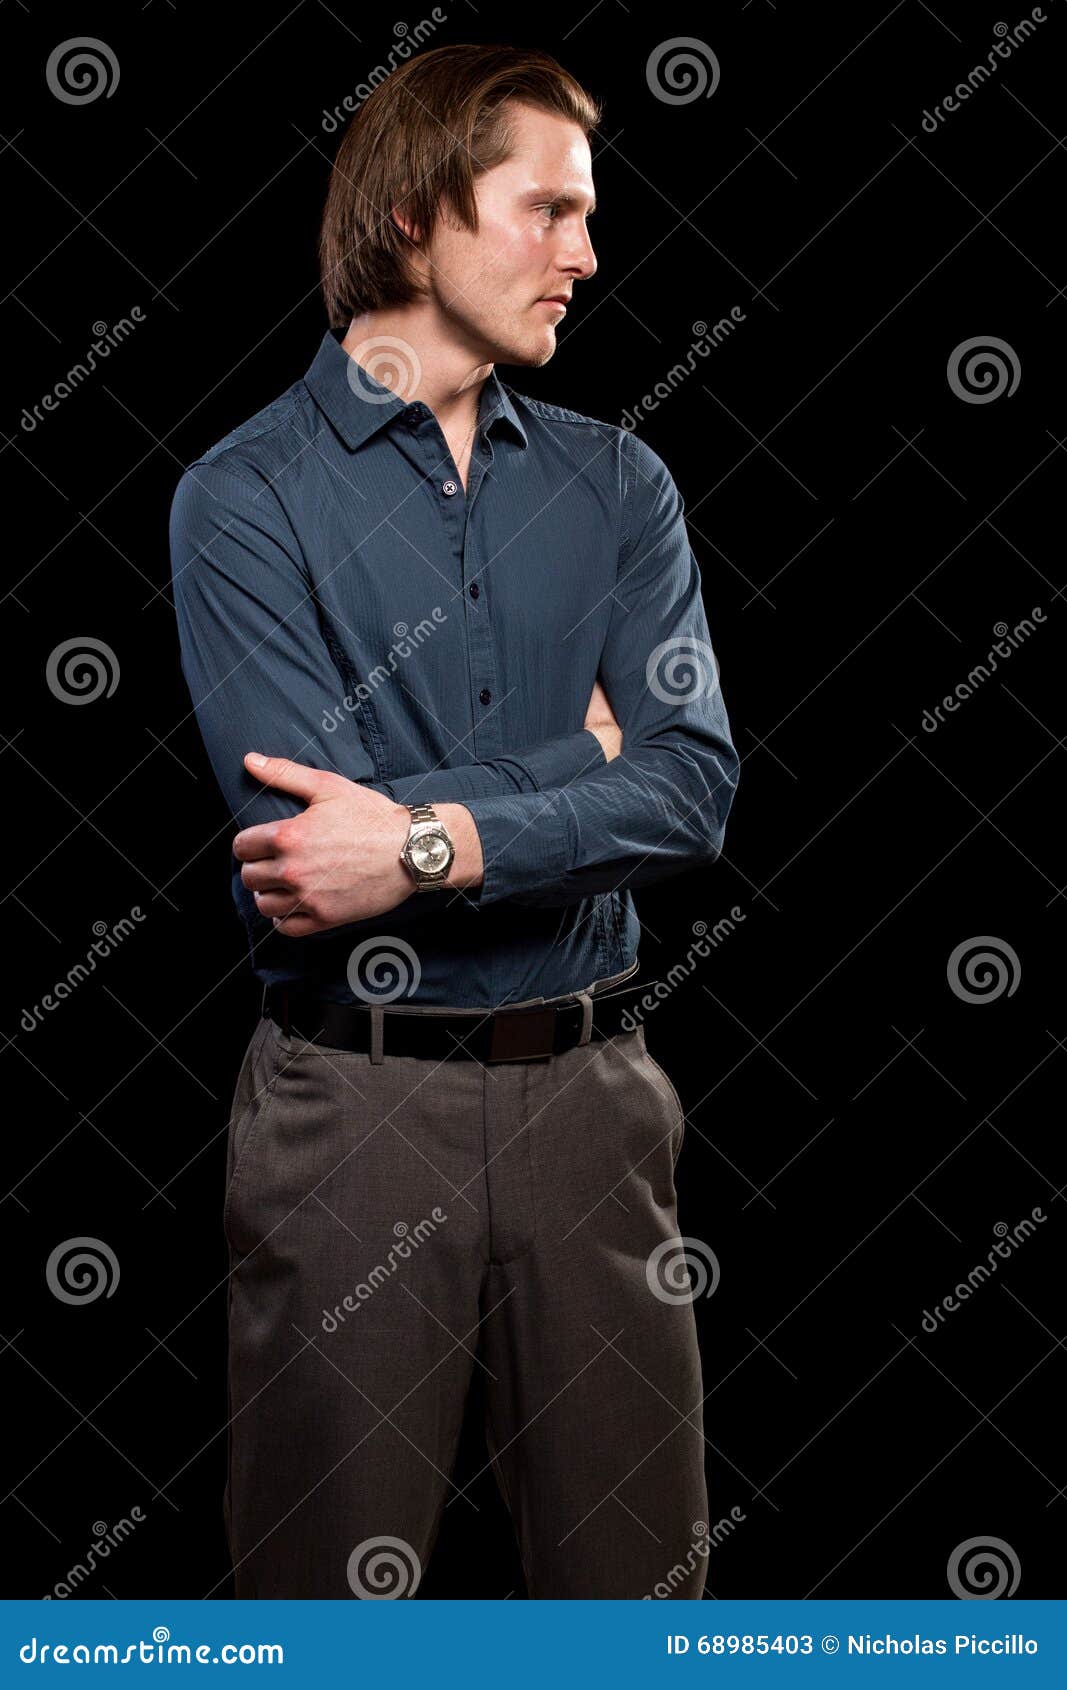 man in blue shirt and grey slacks